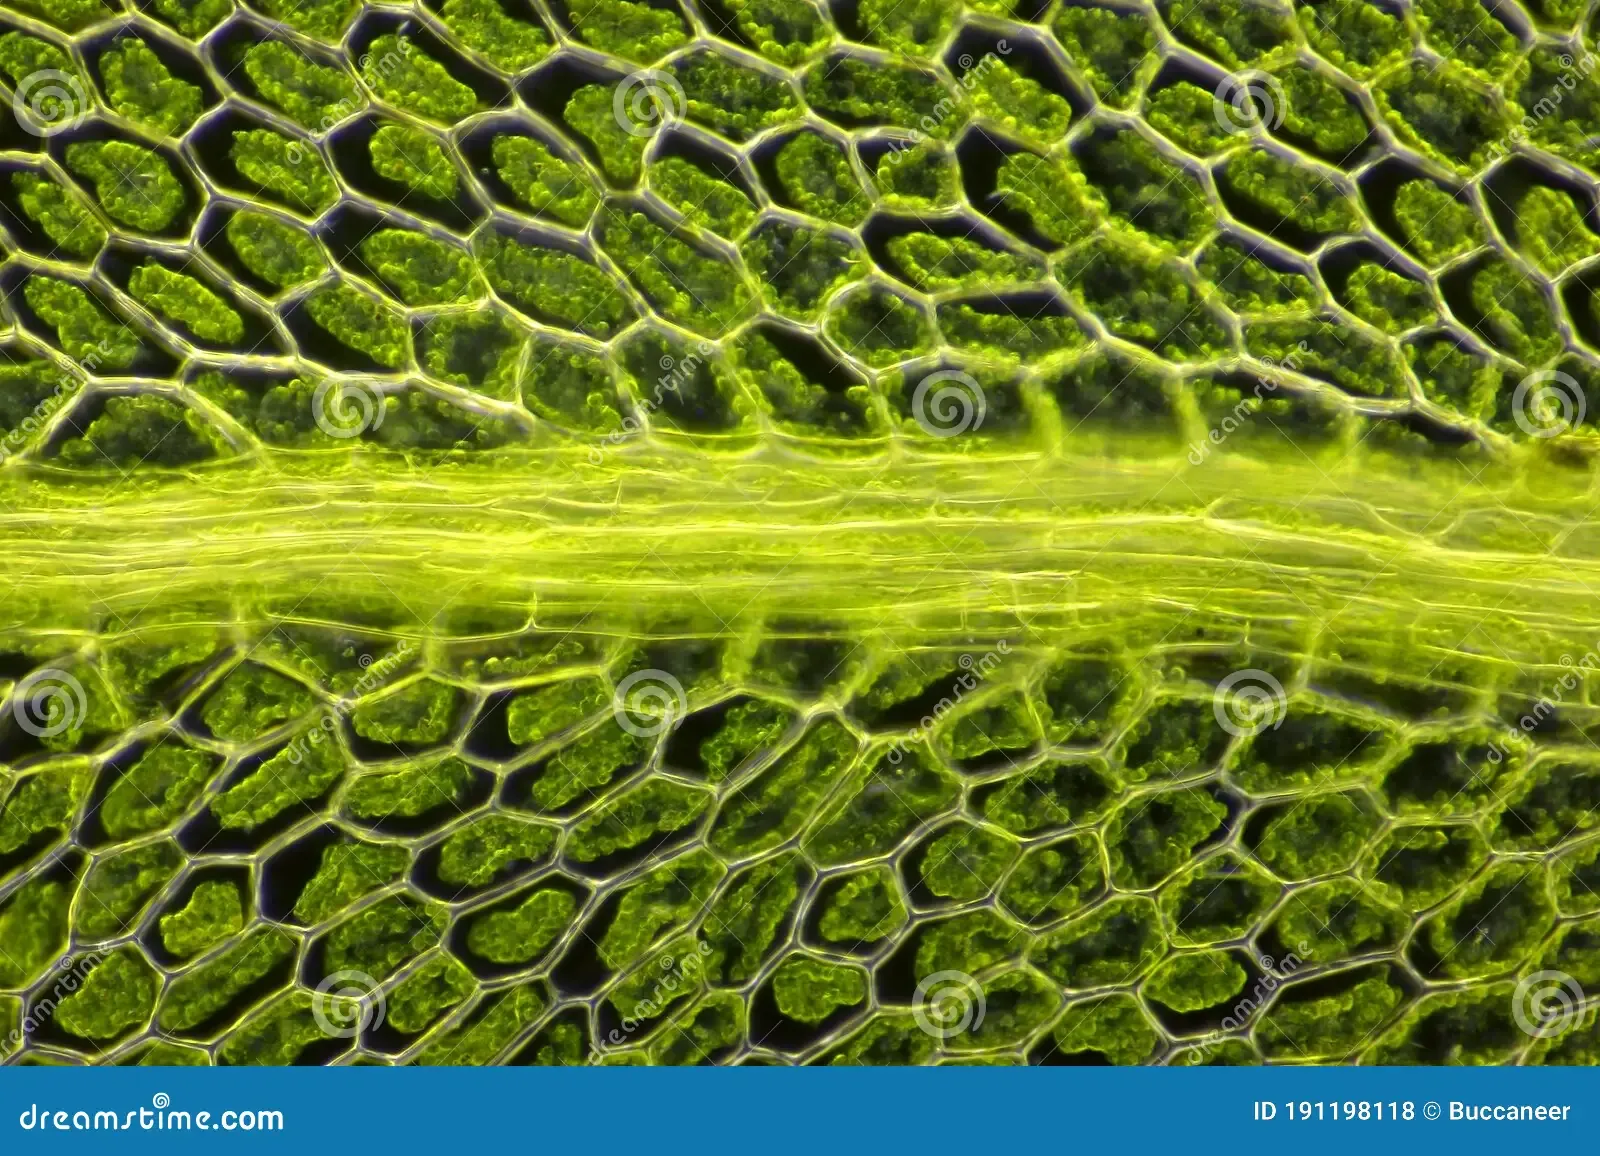 microscopic-view-moss-leaf-plagiomnium-affine-darkfield-illumination-191198118.jpg